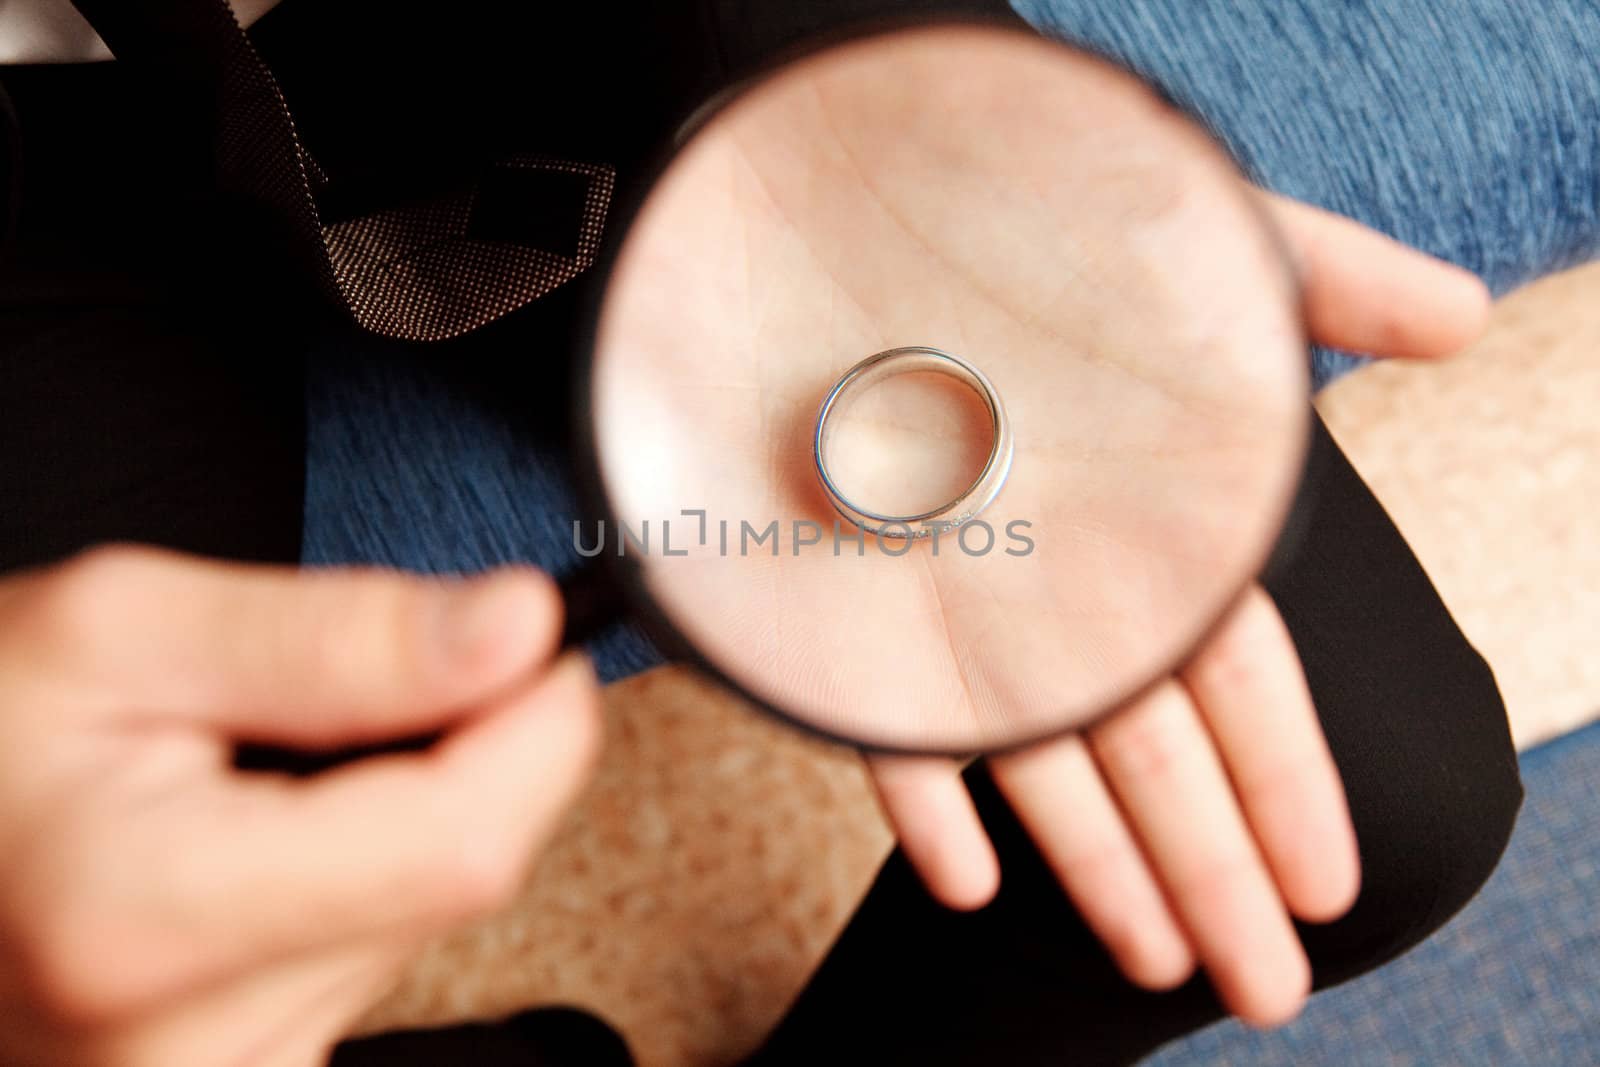 wedding ring through the loupe